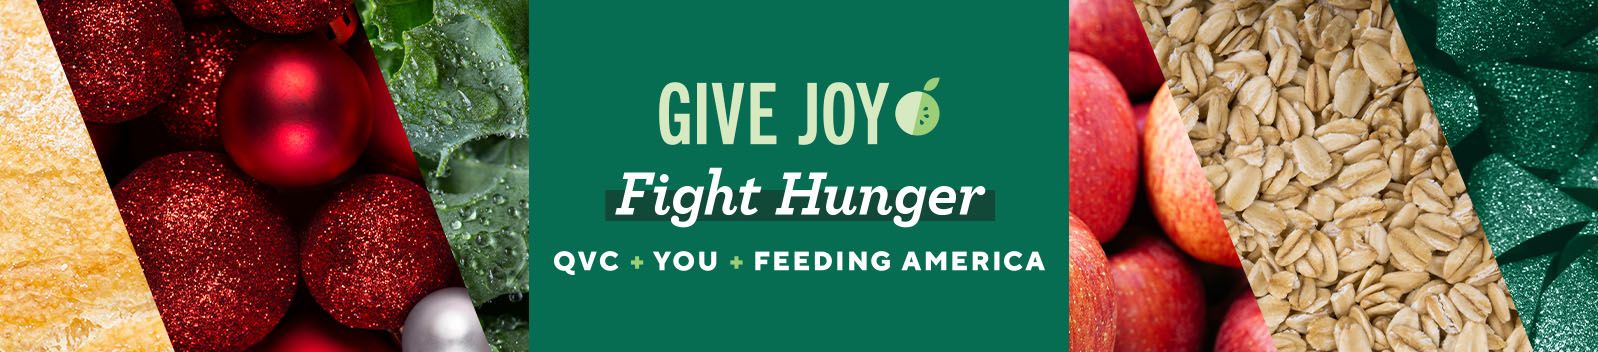 Give Joy Fight Hunger QVC® + You + Feeding America